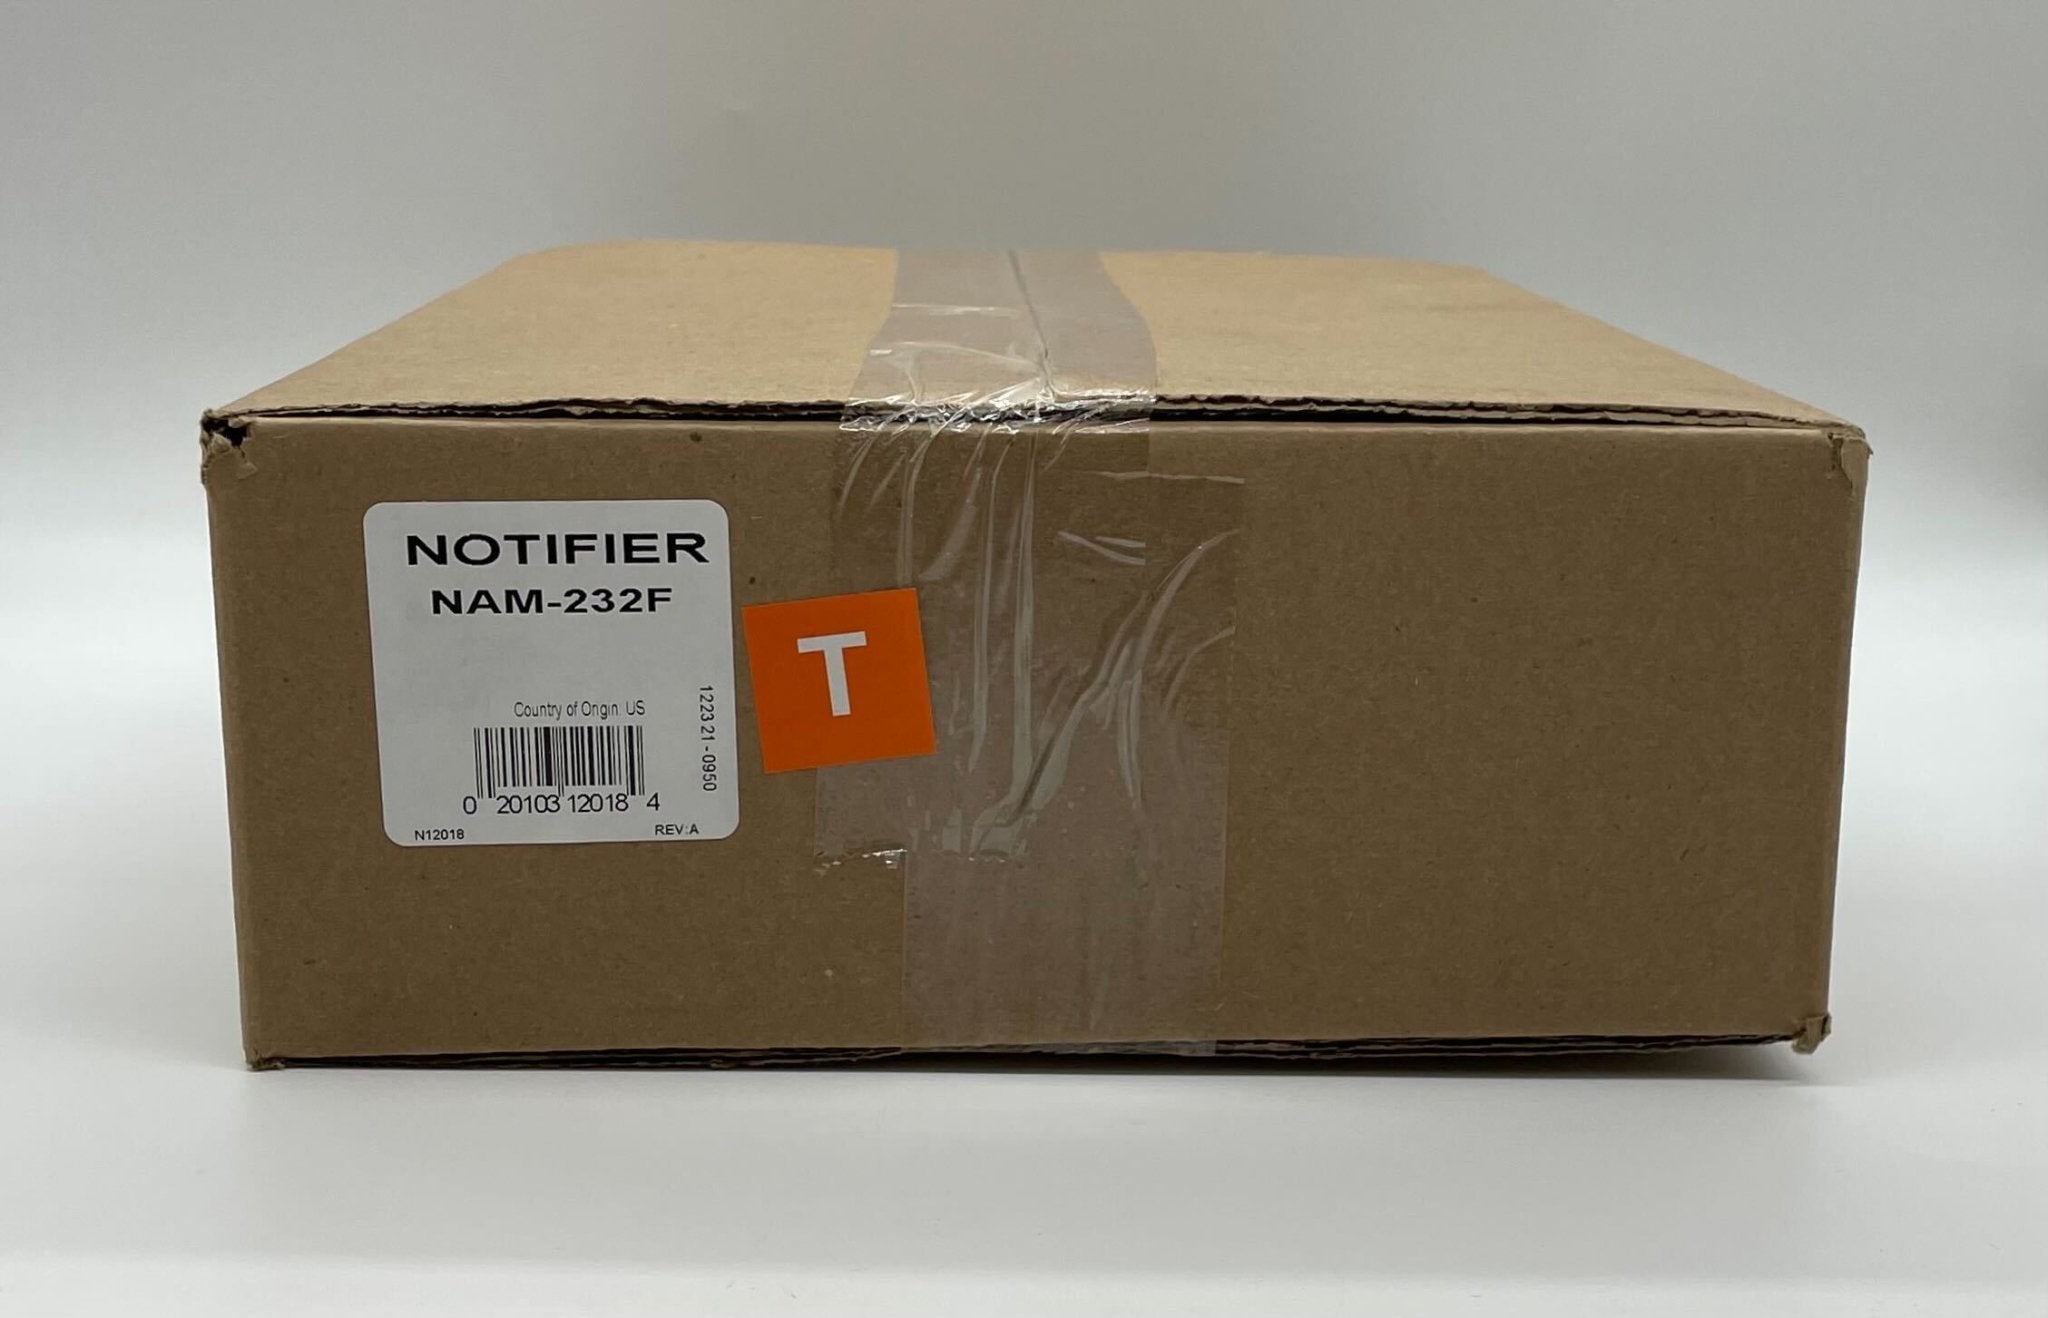 Notifier NAM-232F - The Fire Alarm Supplier